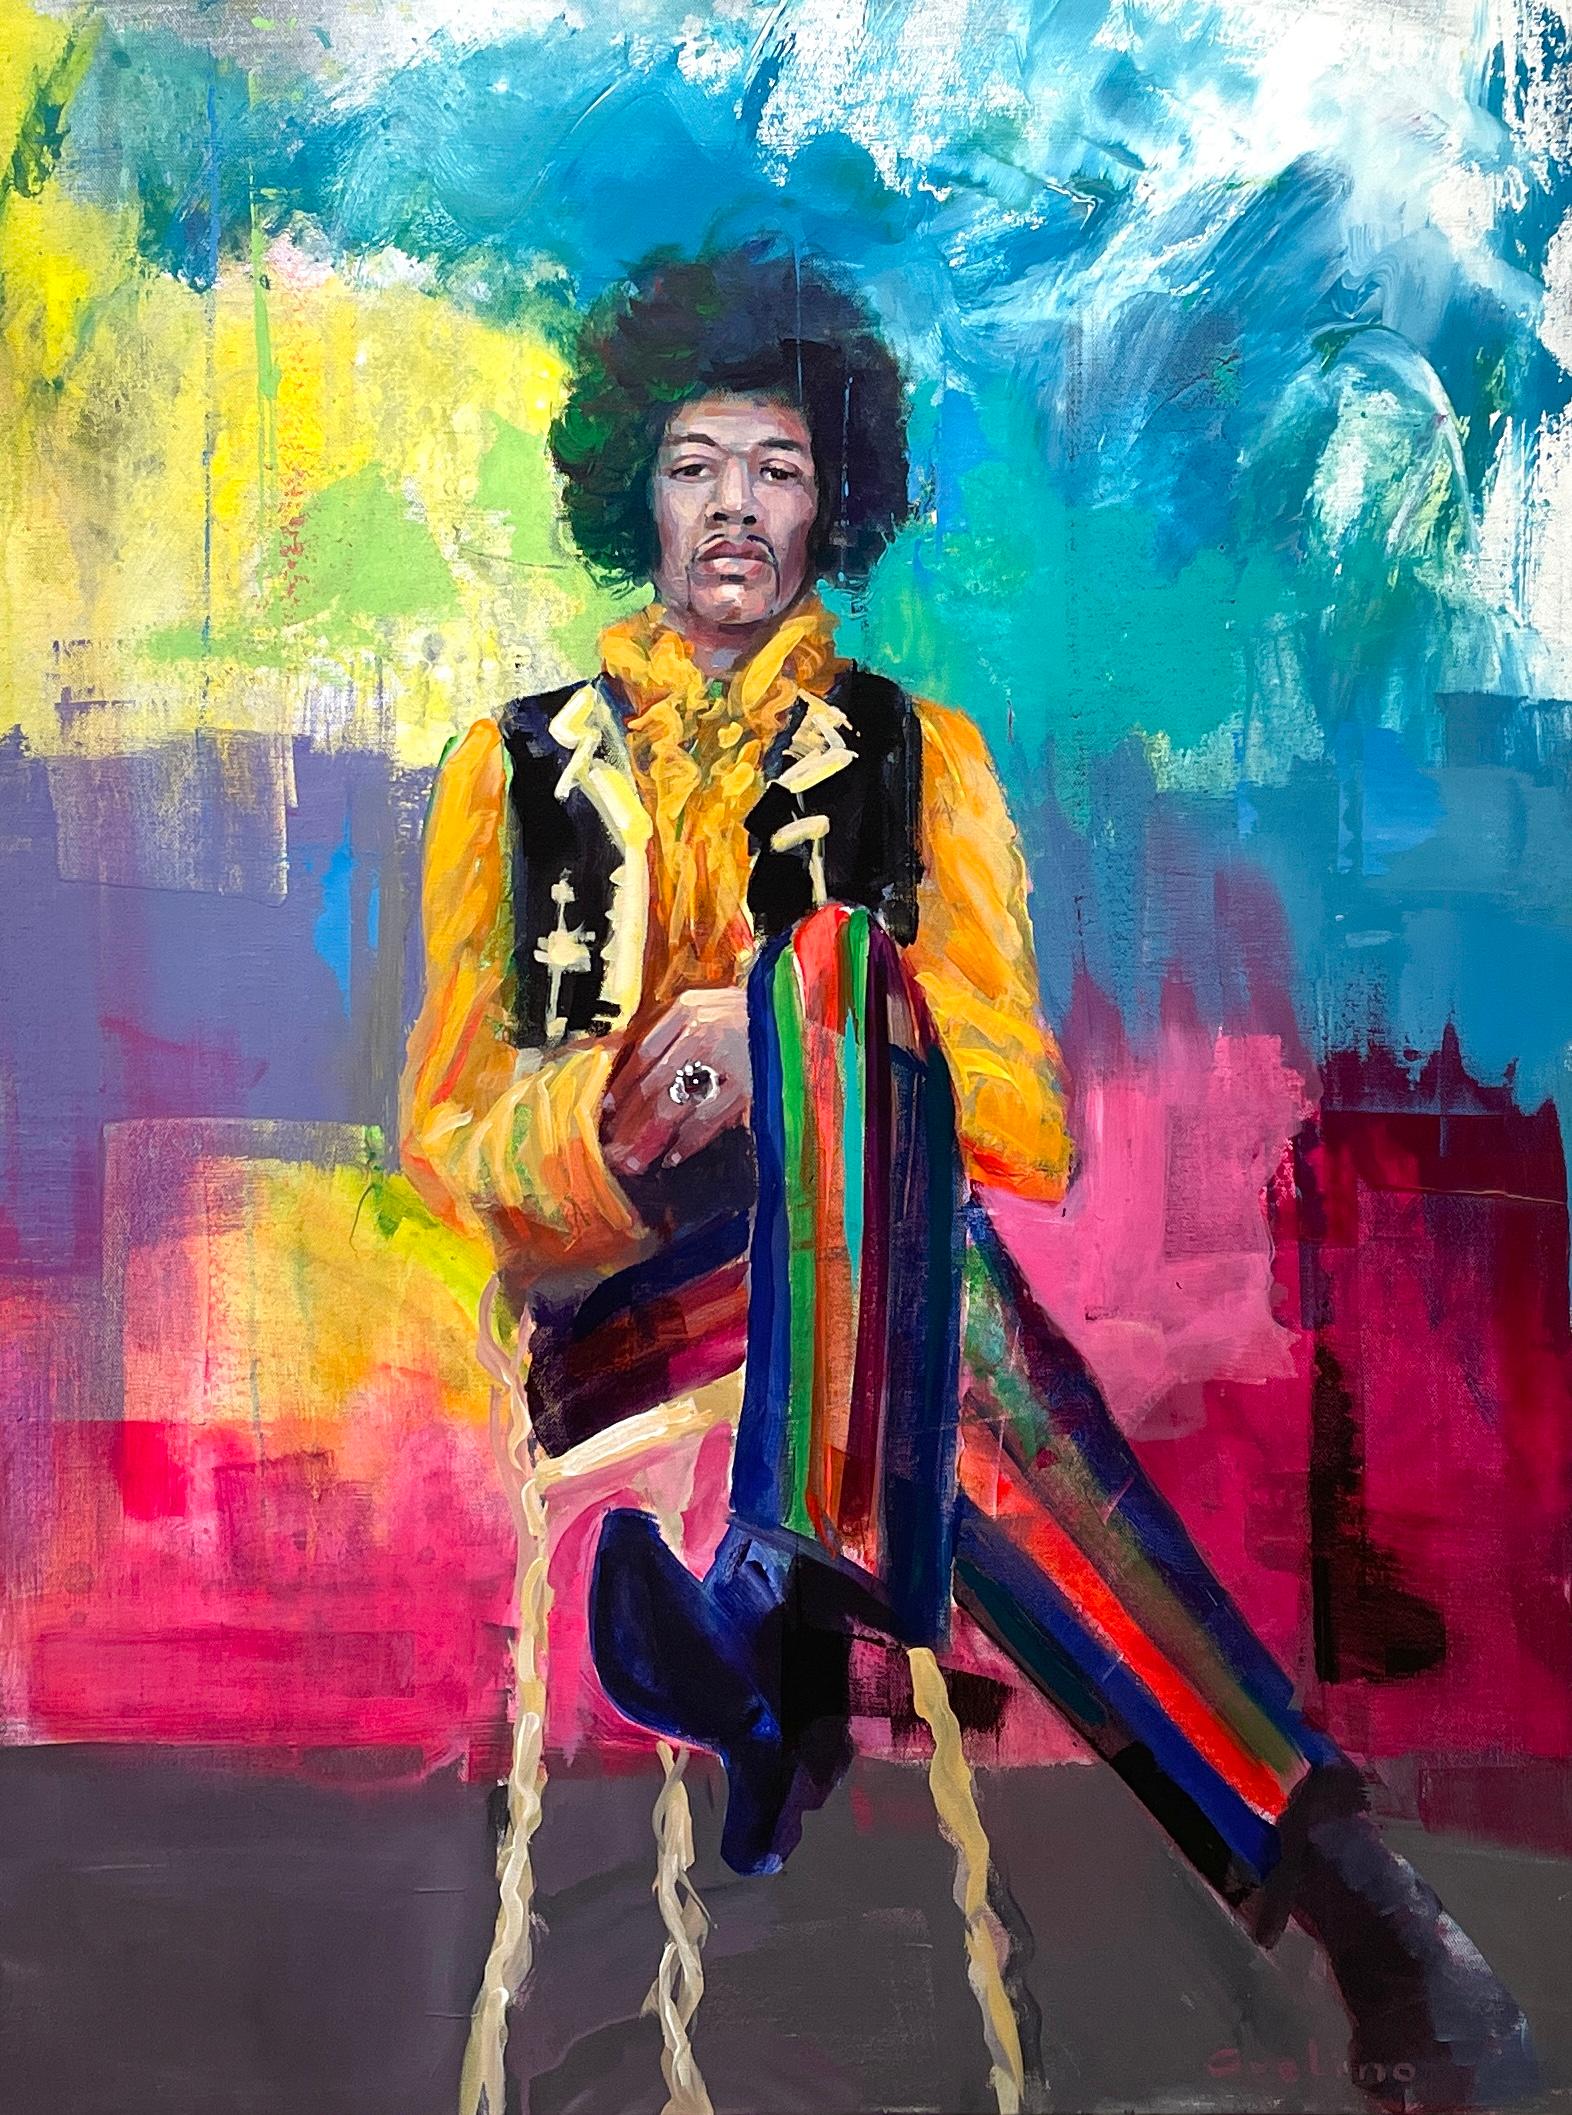 Avelino Sanher Figurative Painting - "Hendrix" - Colorful Contemporary Abstract Figurative of Jimi Hendrix